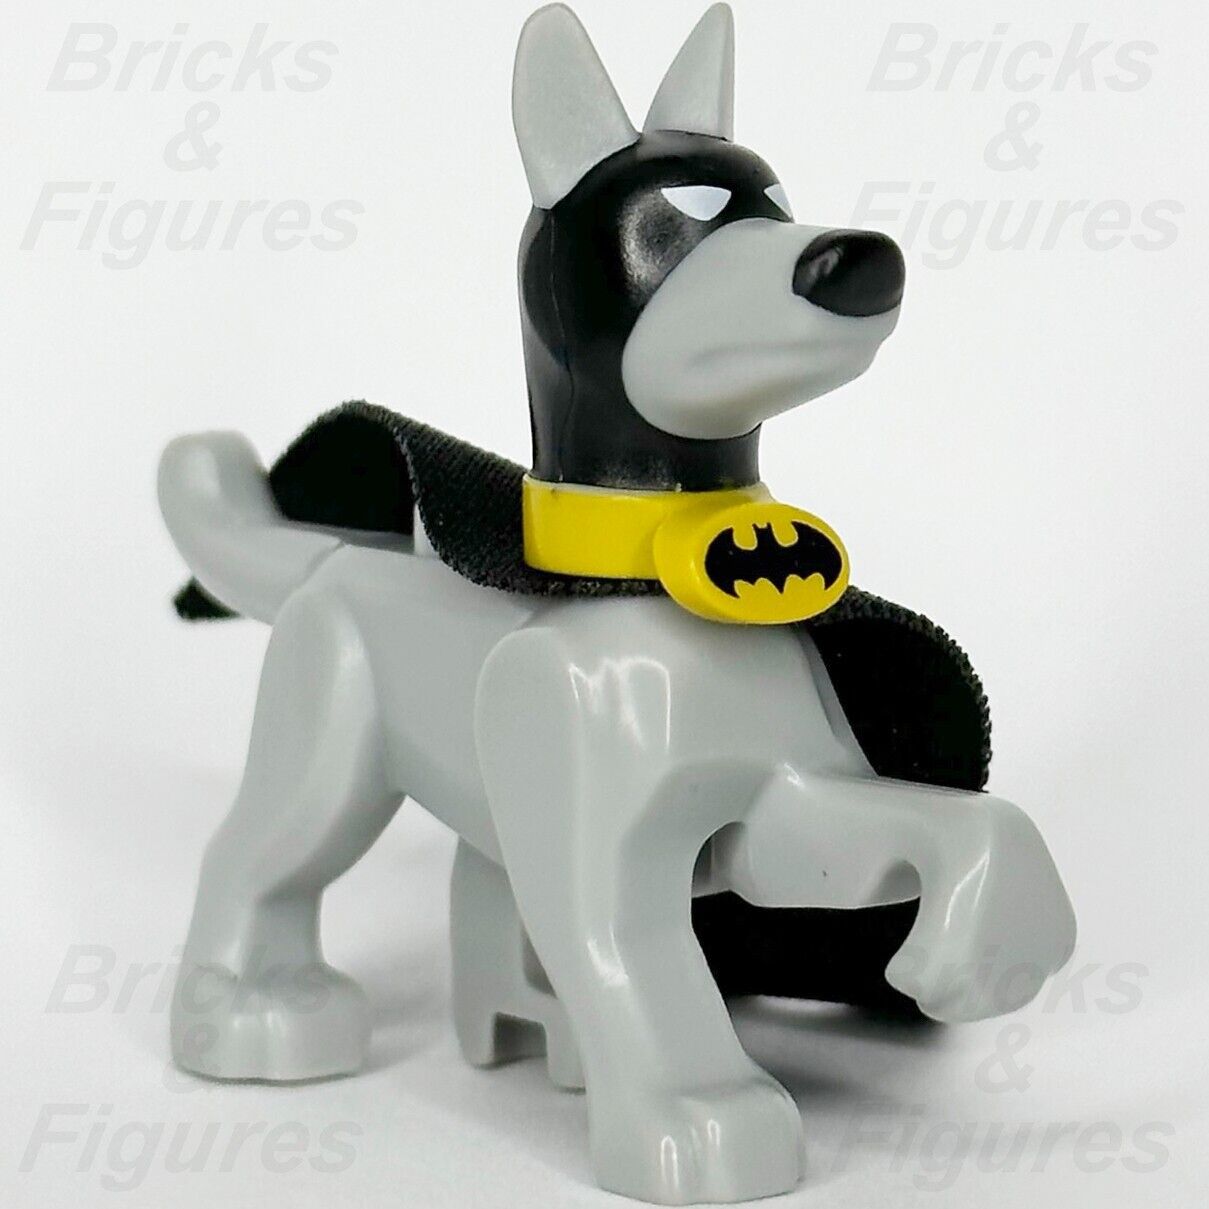 LEGO DC Super Heroes Ace the Bat-Hound Minifigure Dog Batman 2 76110 30533c02 1